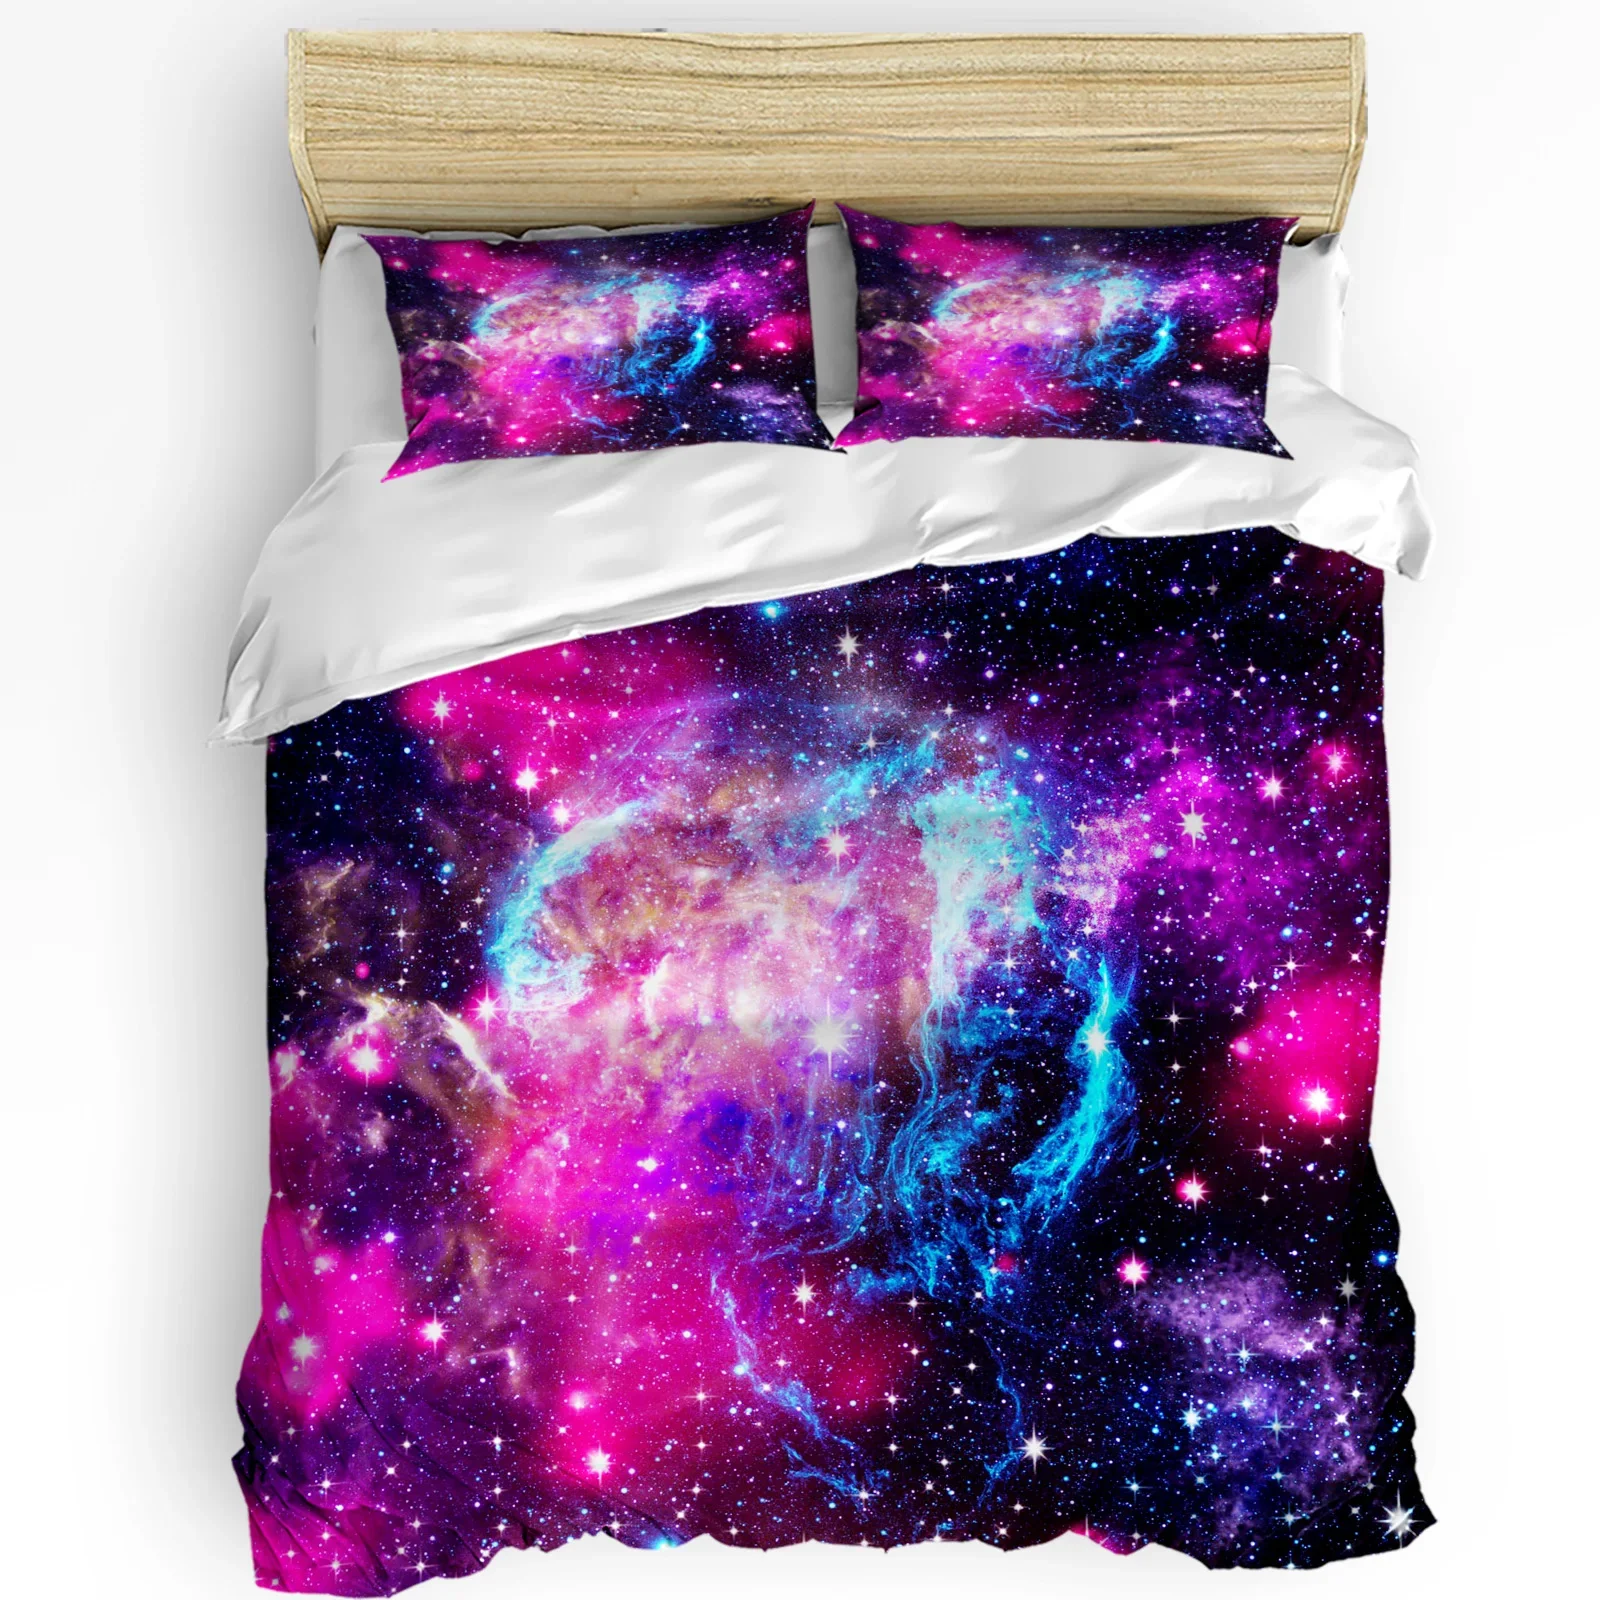 

Universe Starry Sky Nebula Art 3pcs Bedding Set For Bedroom Double Bed Home Textile Duvet Cover Quilt Cover Pillowcase